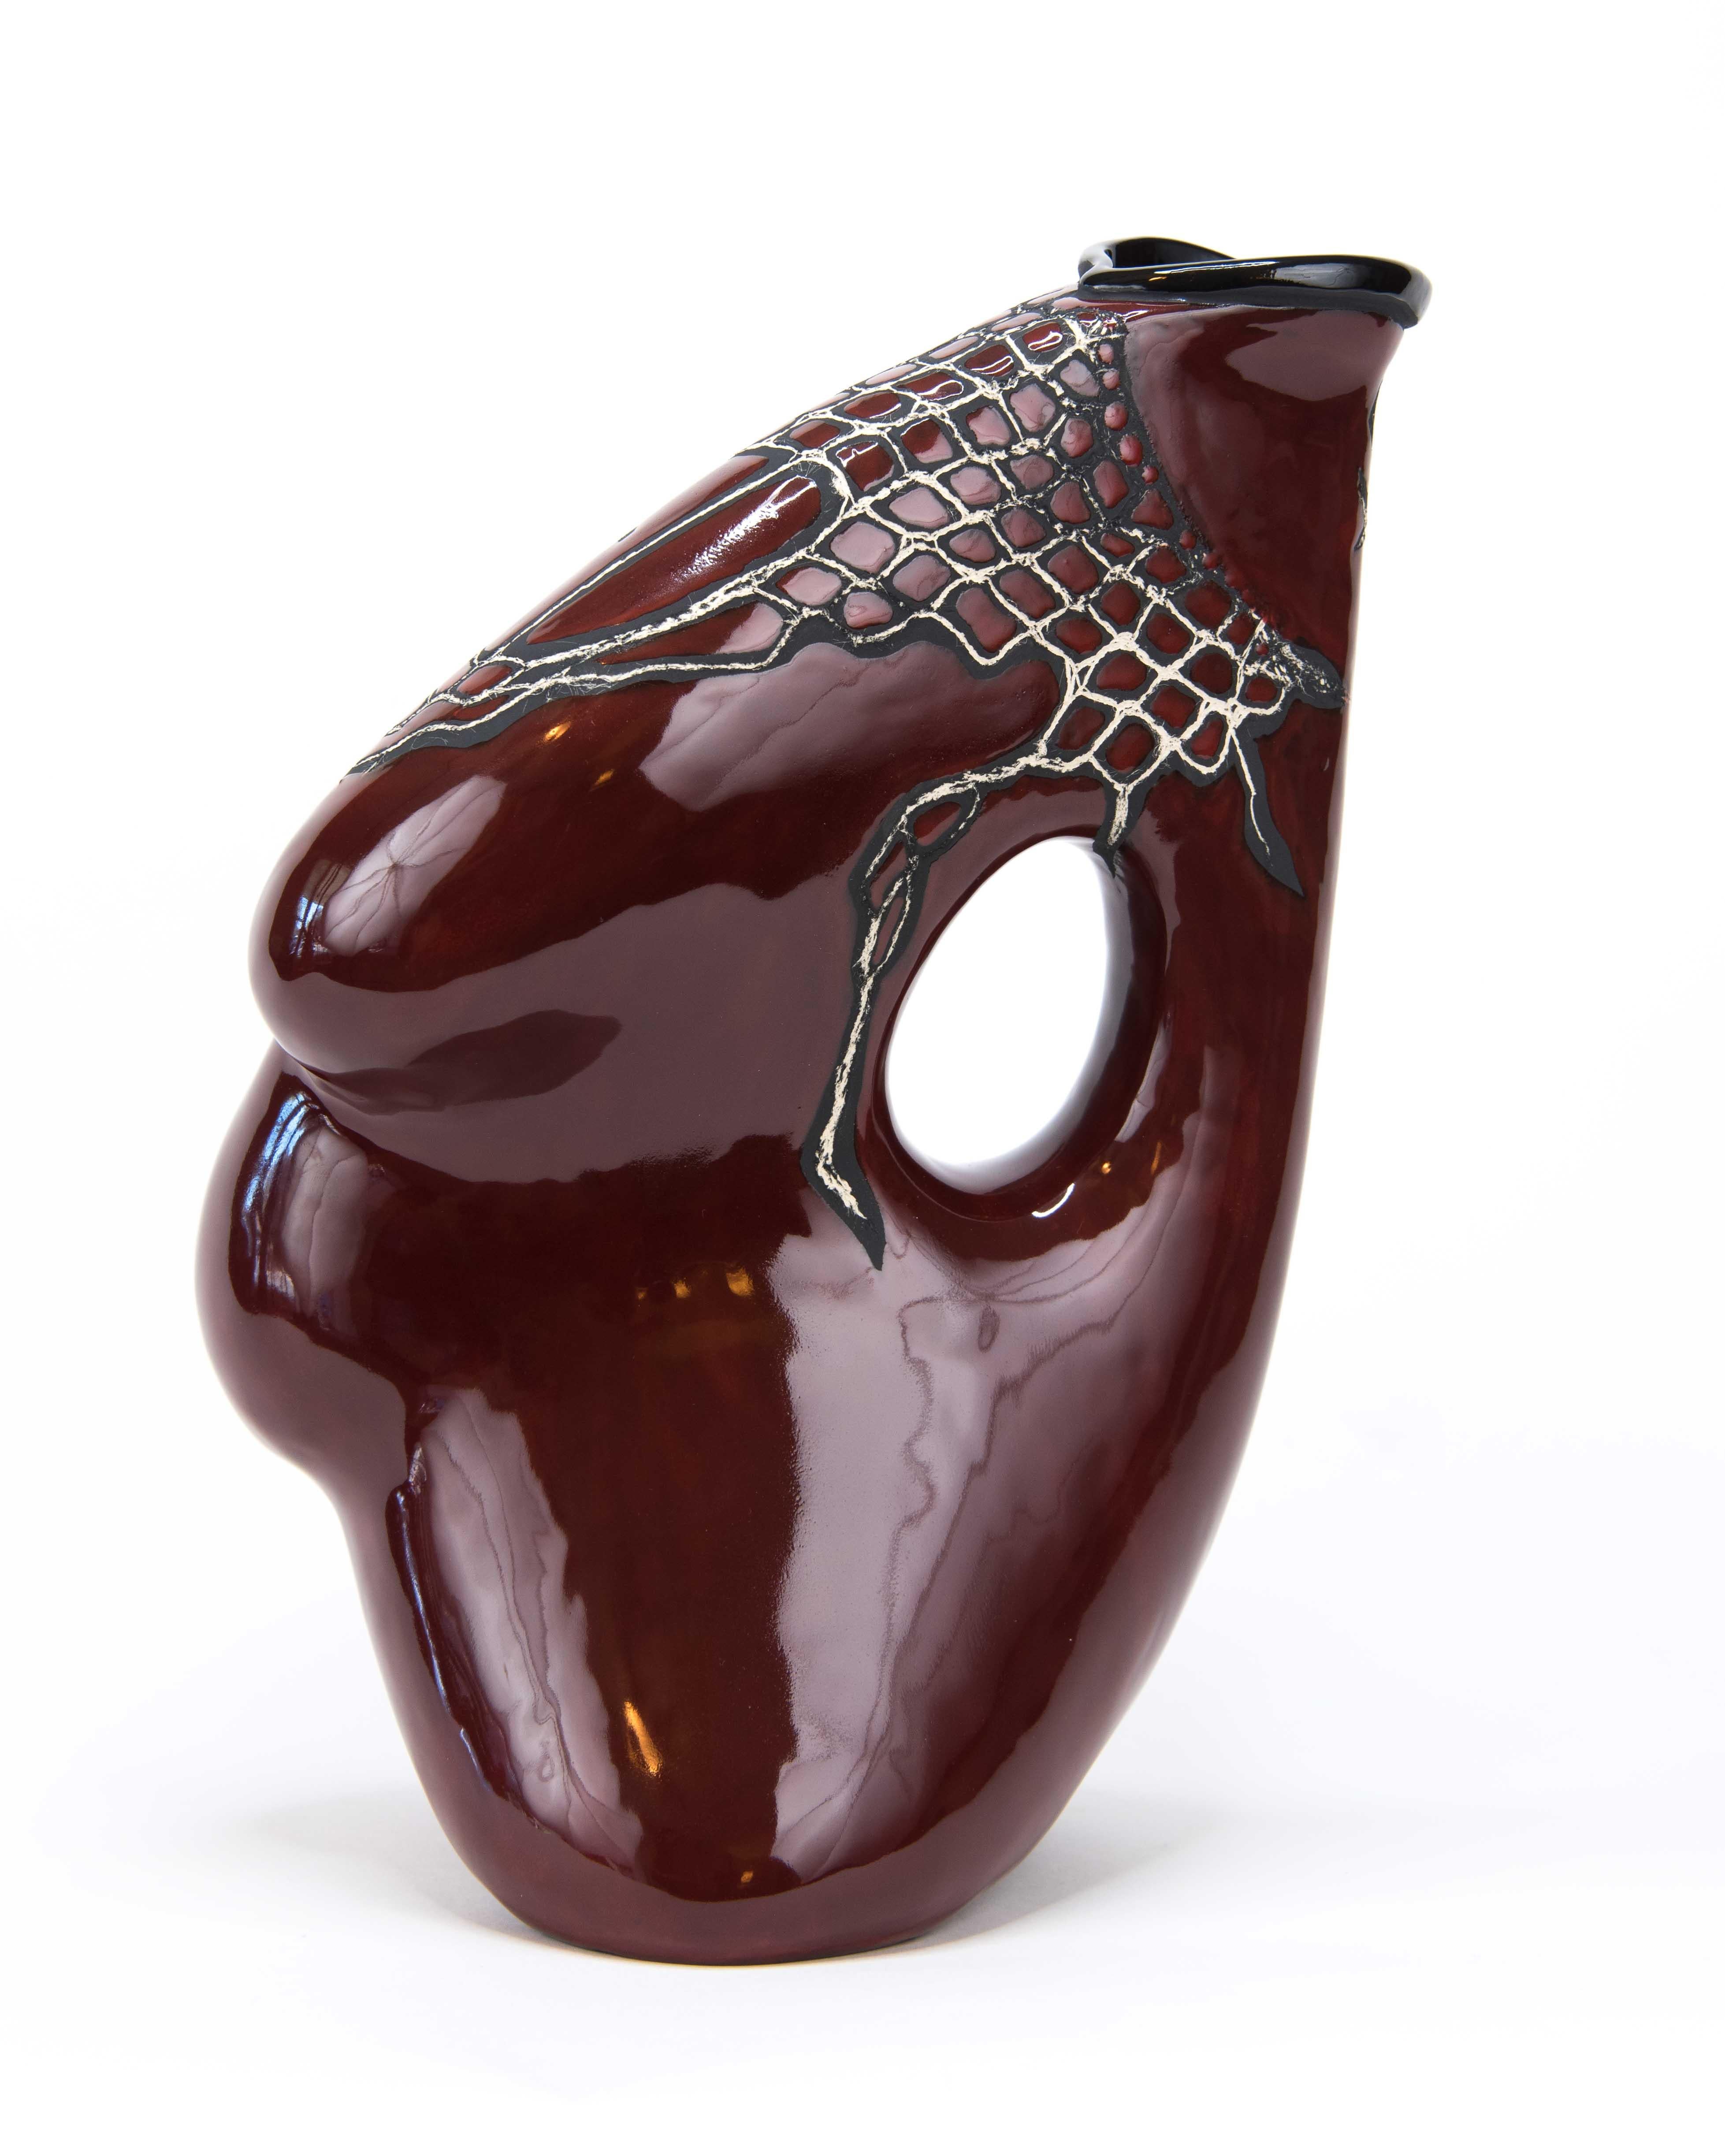 RED GODDESS - Ceramic Slip Cast Fine Art Sculpture 2018   For Sale 2